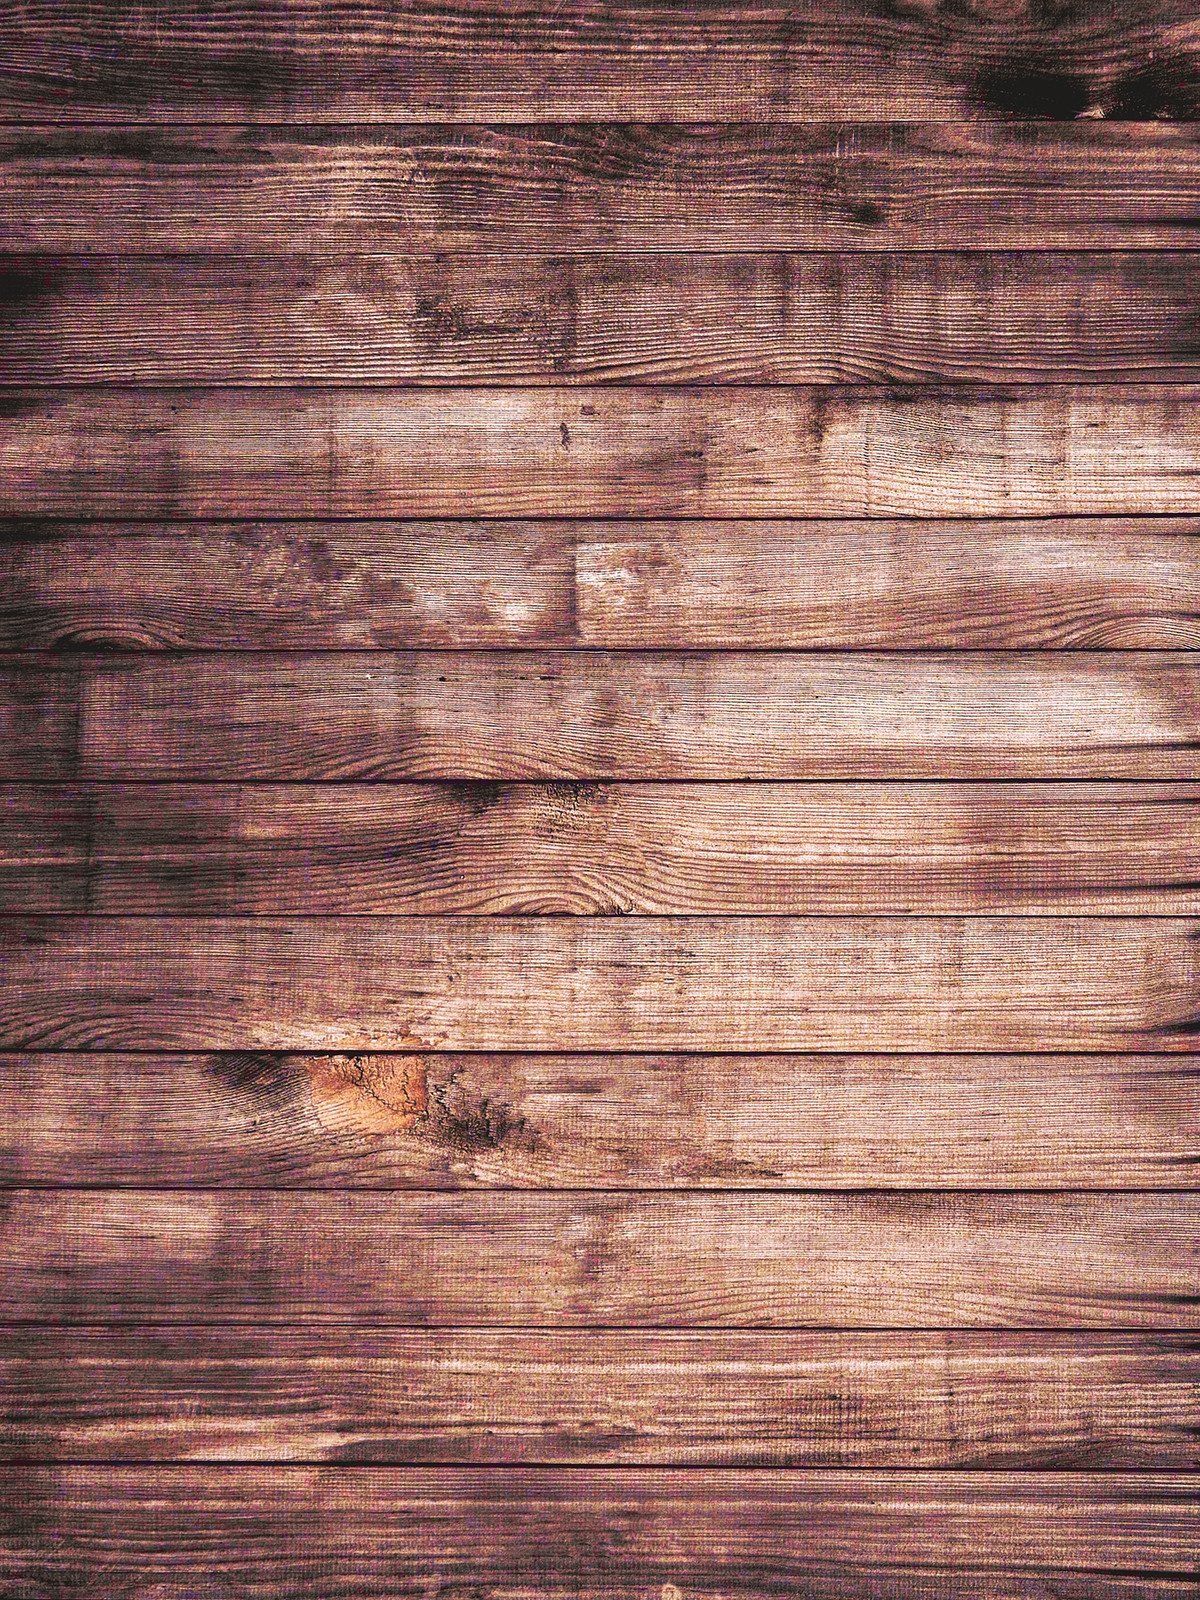 Aesthetic Wood Background